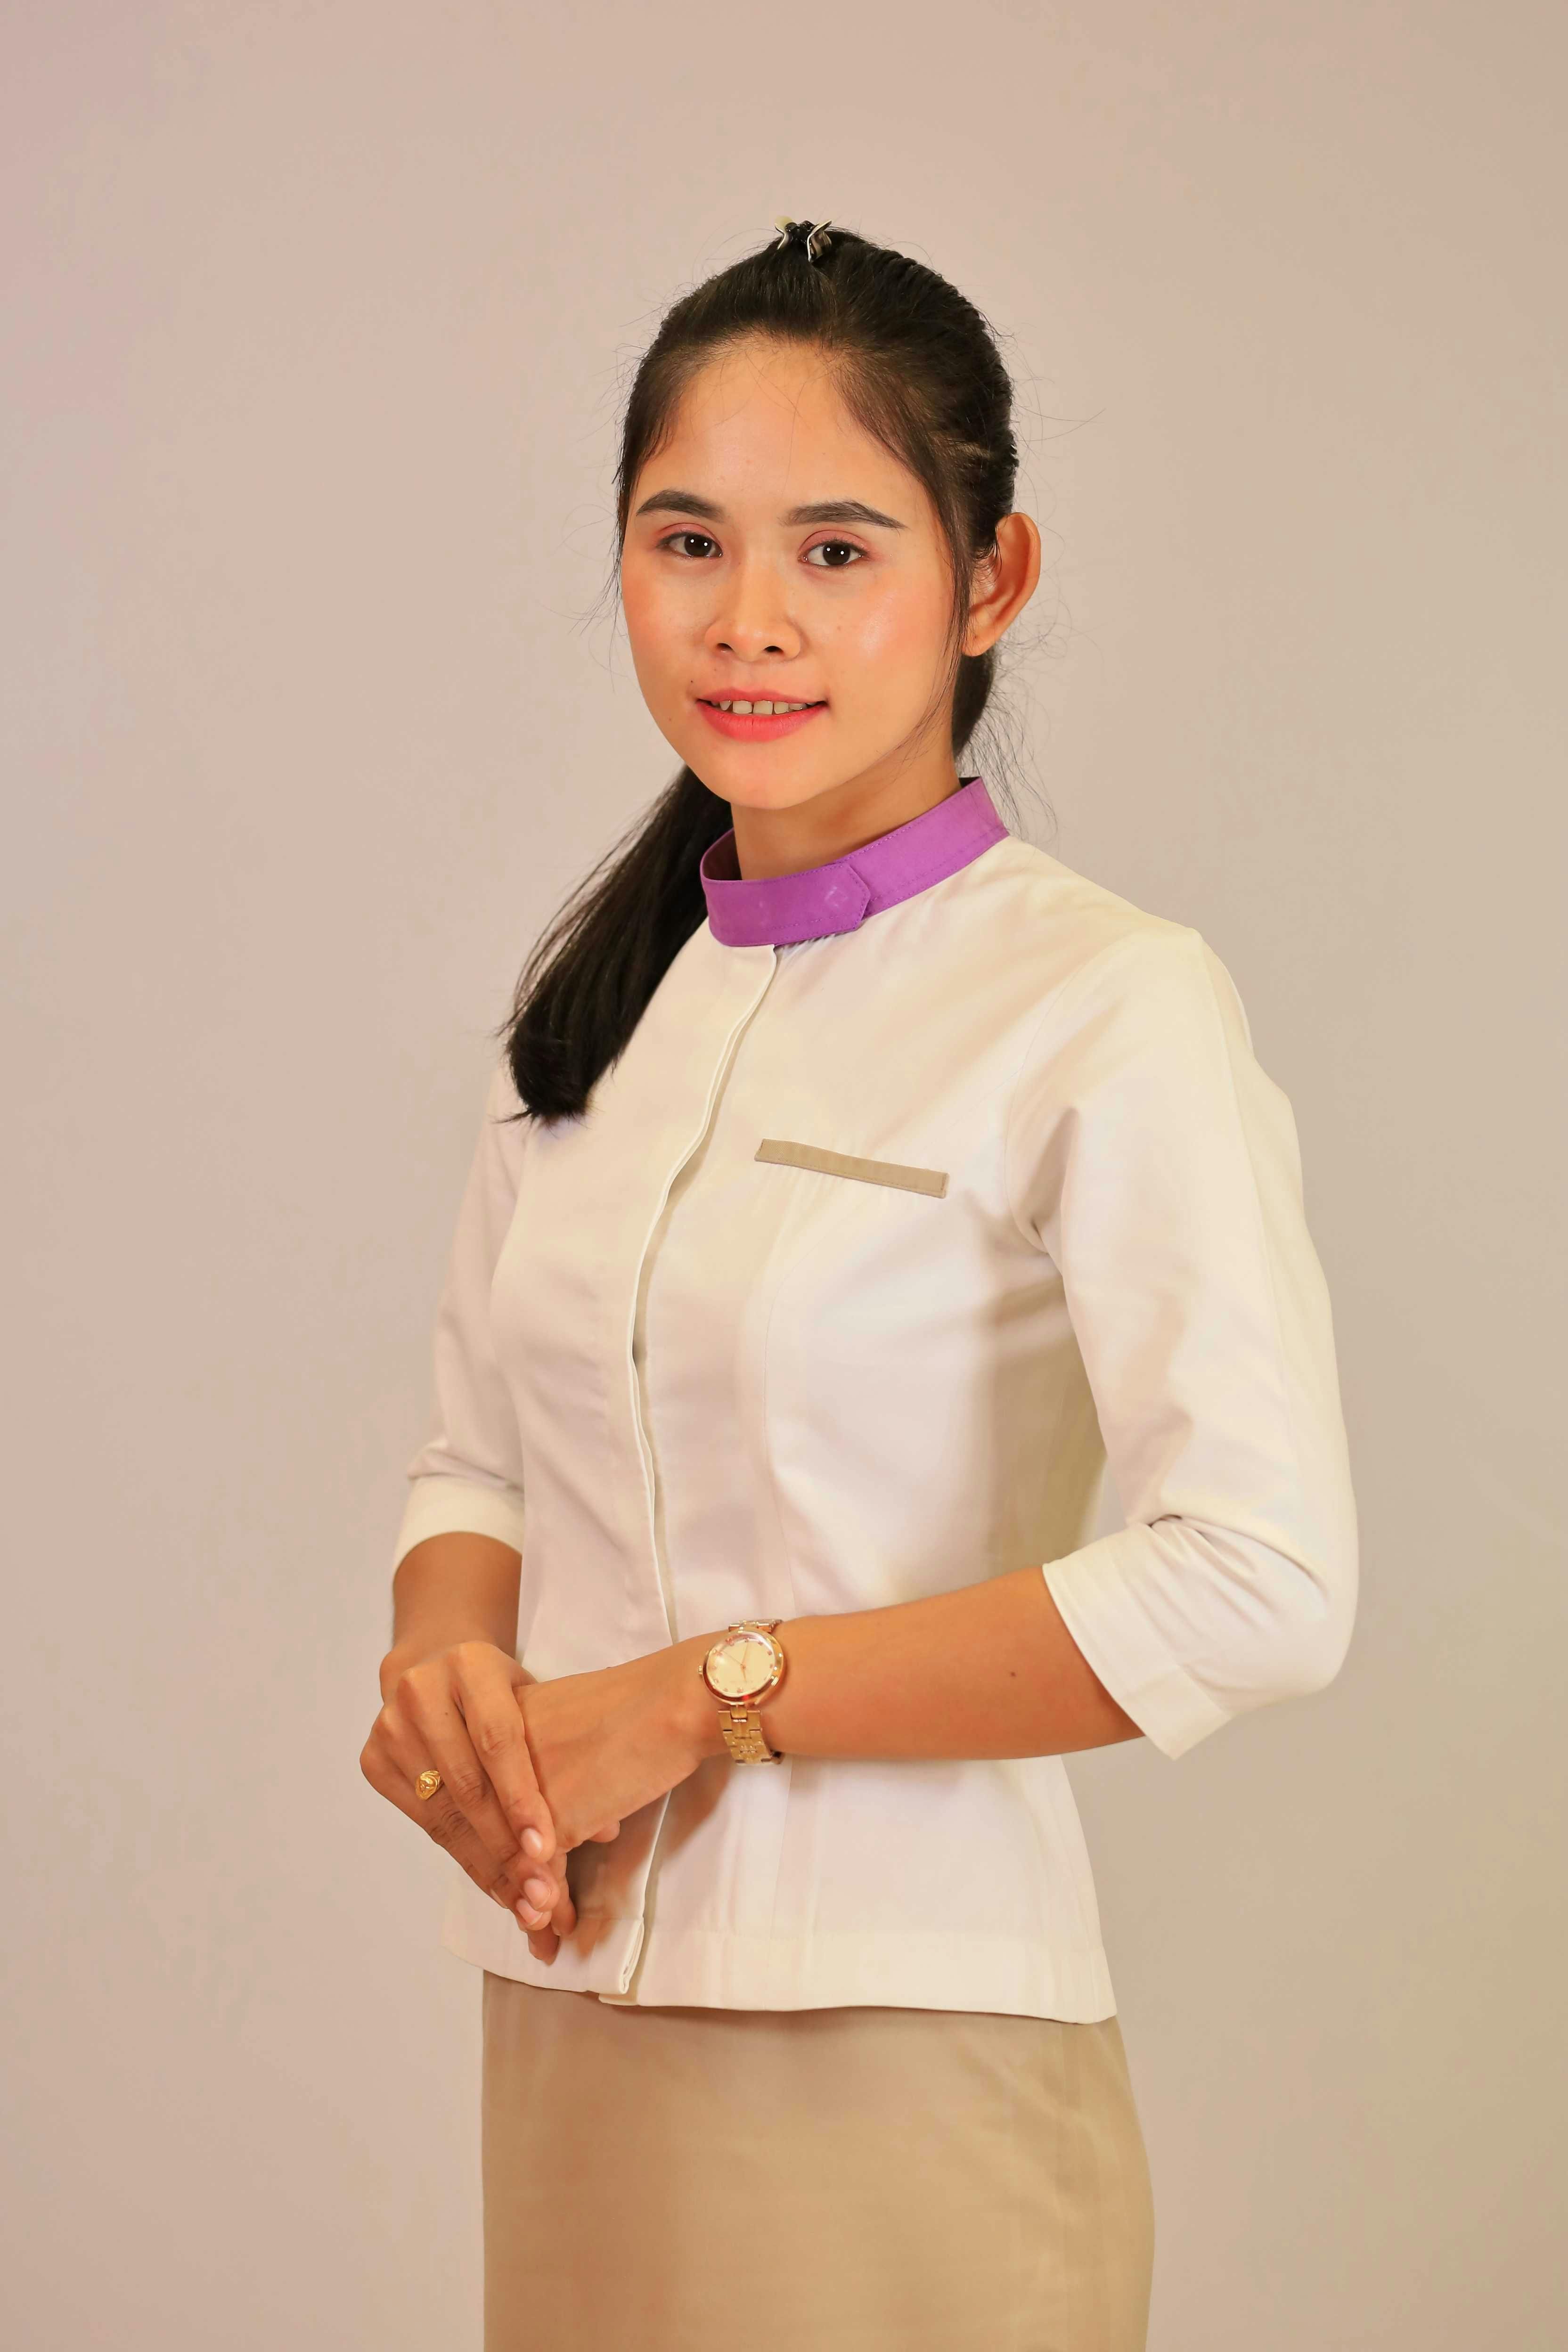 Teacher Palita Chusang